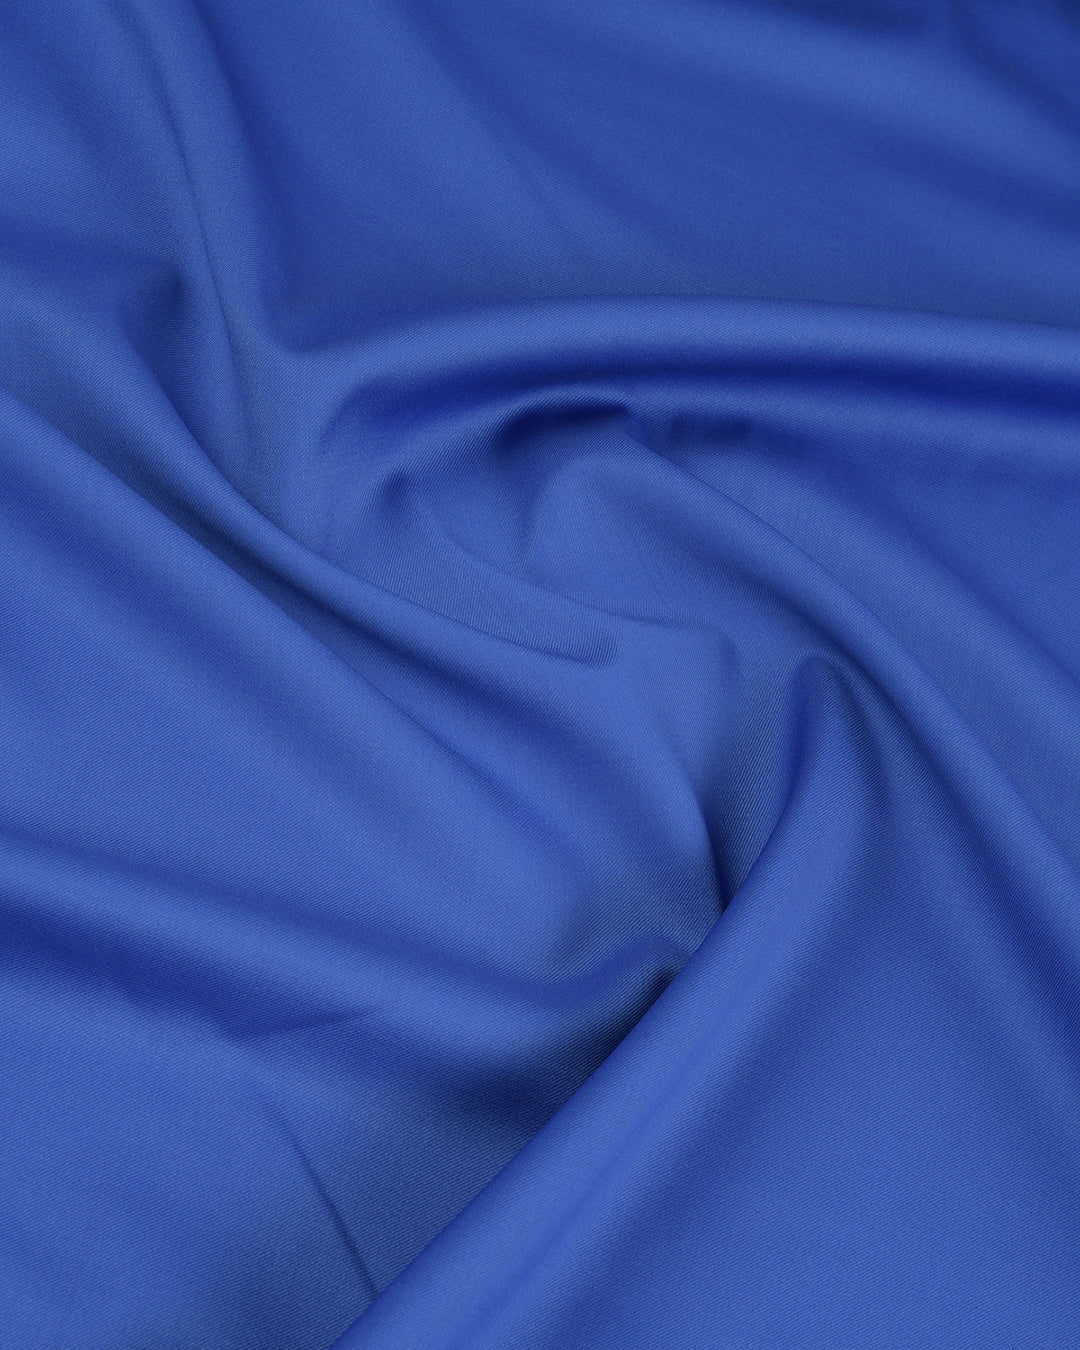 Gurkha Pant in VBC 100% Wool: Royal Blue Twill